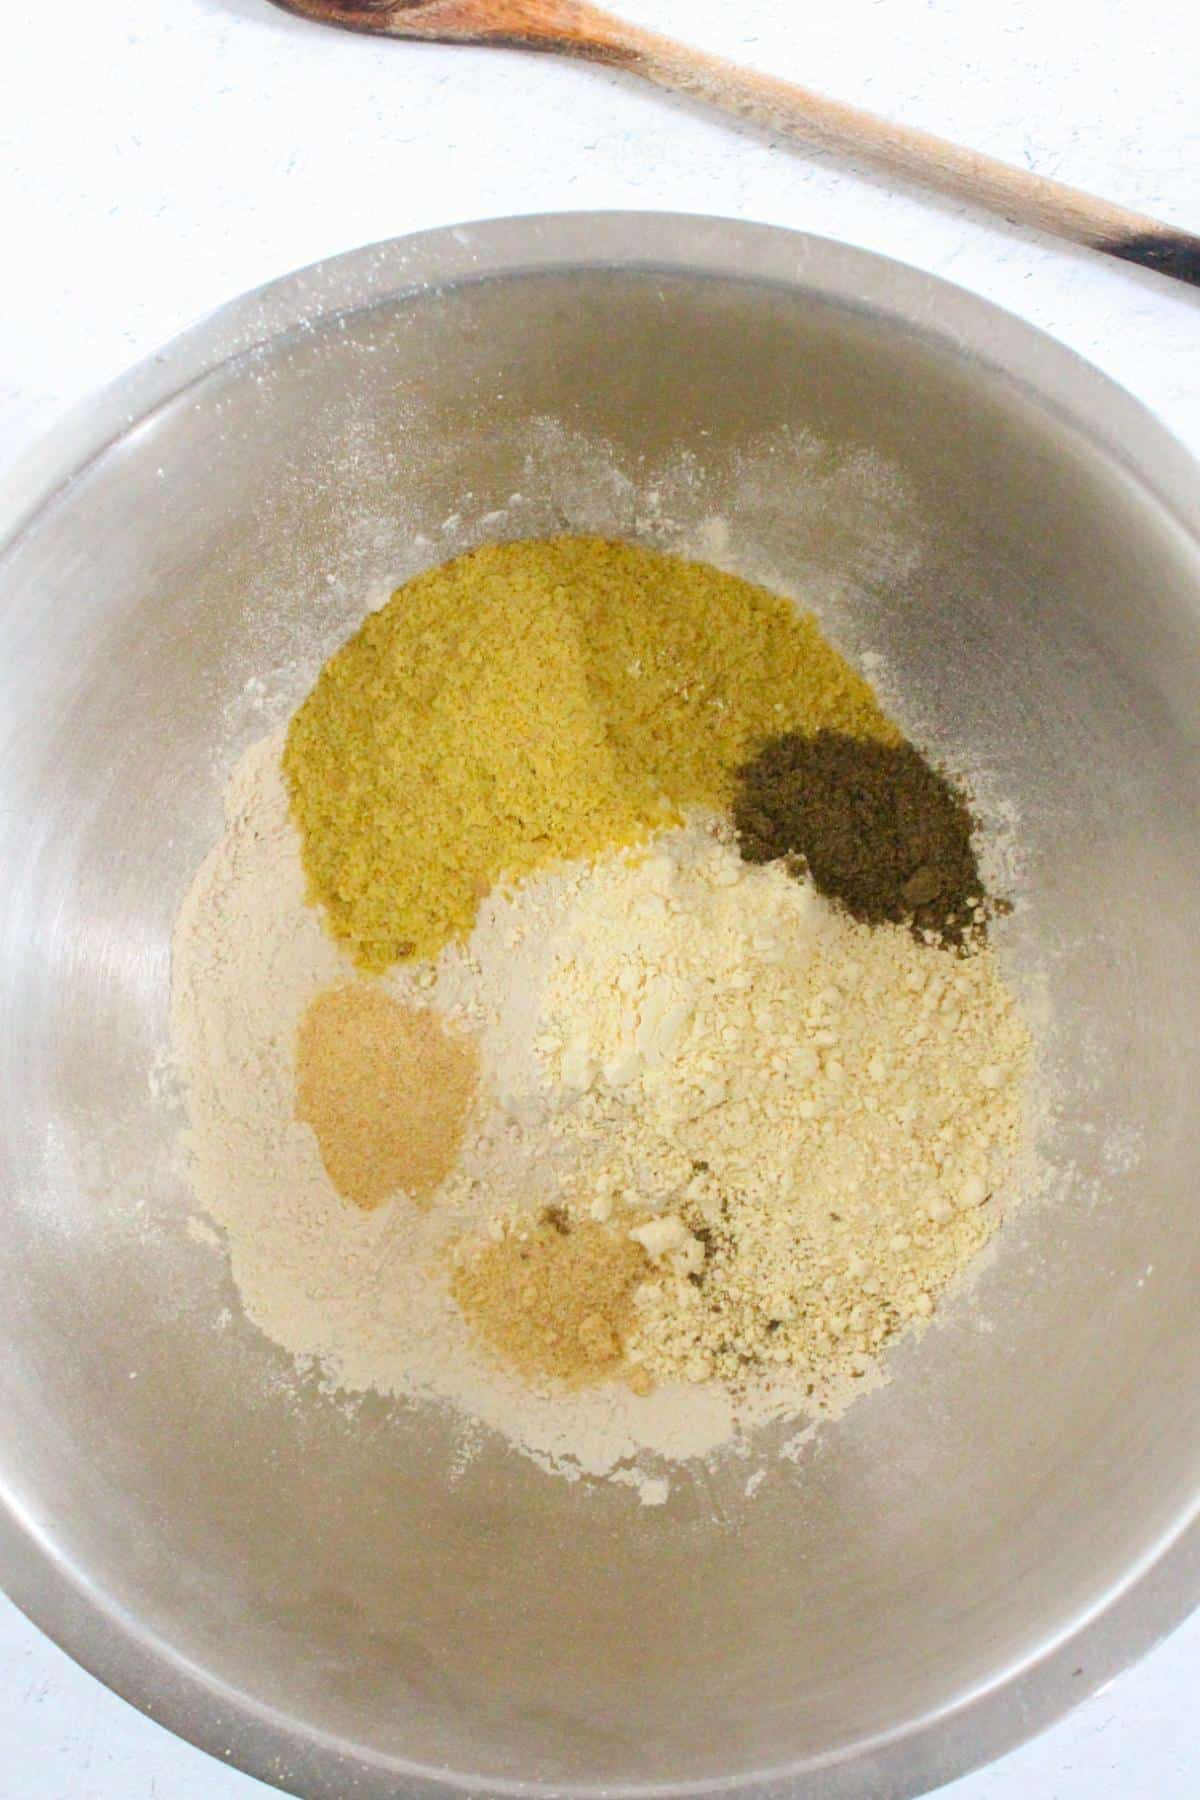 Dry ingredients for vegan seitan chicken in a mixing bowl.